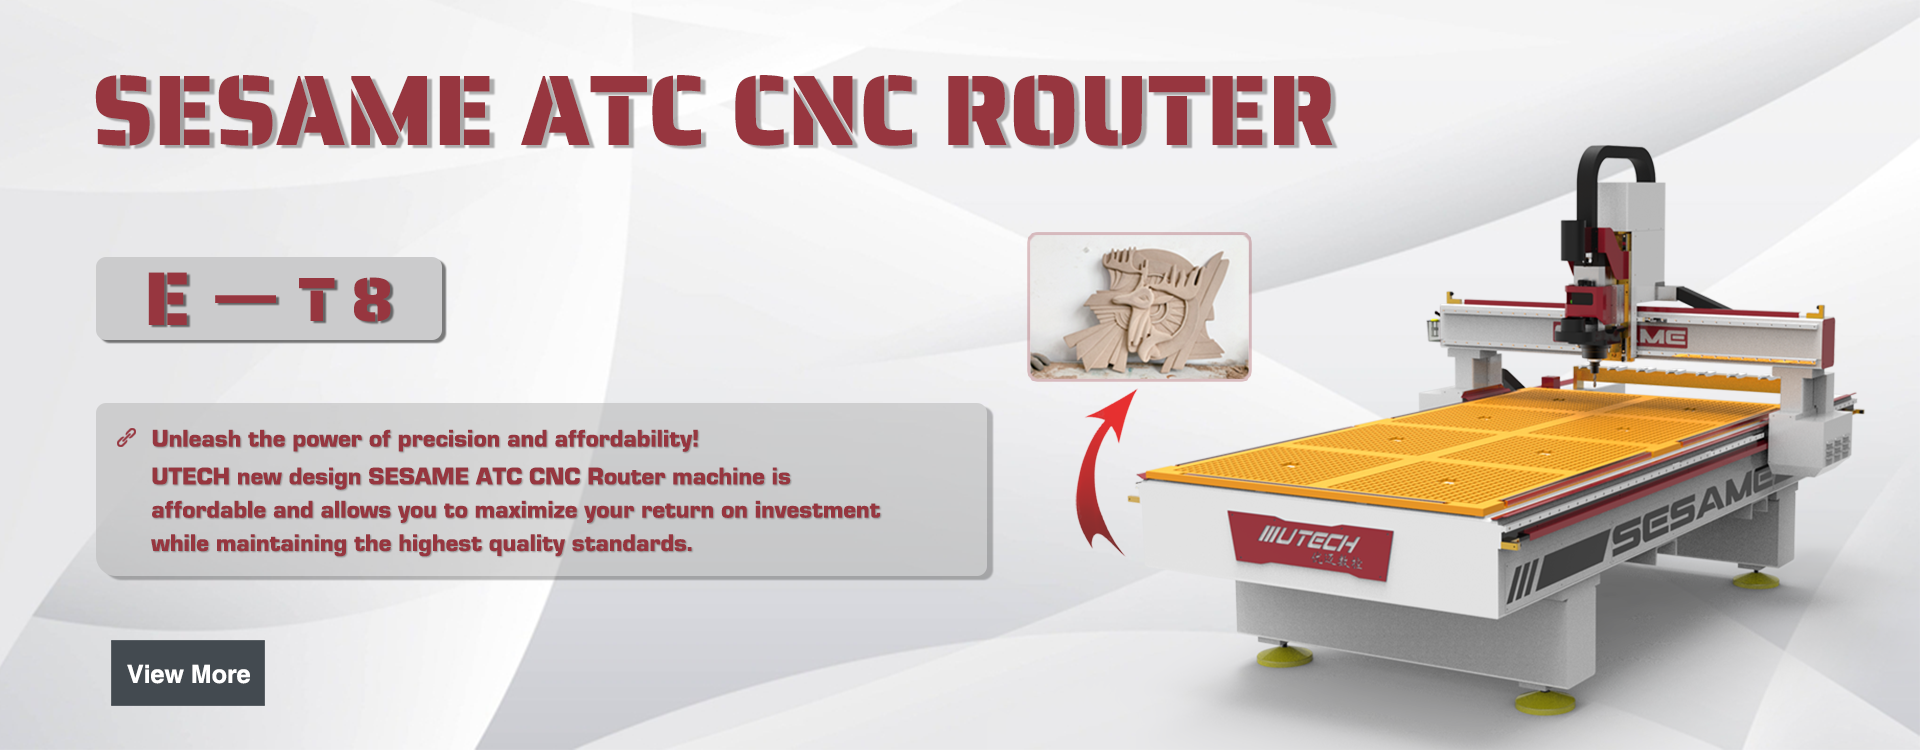 ATC cnc router